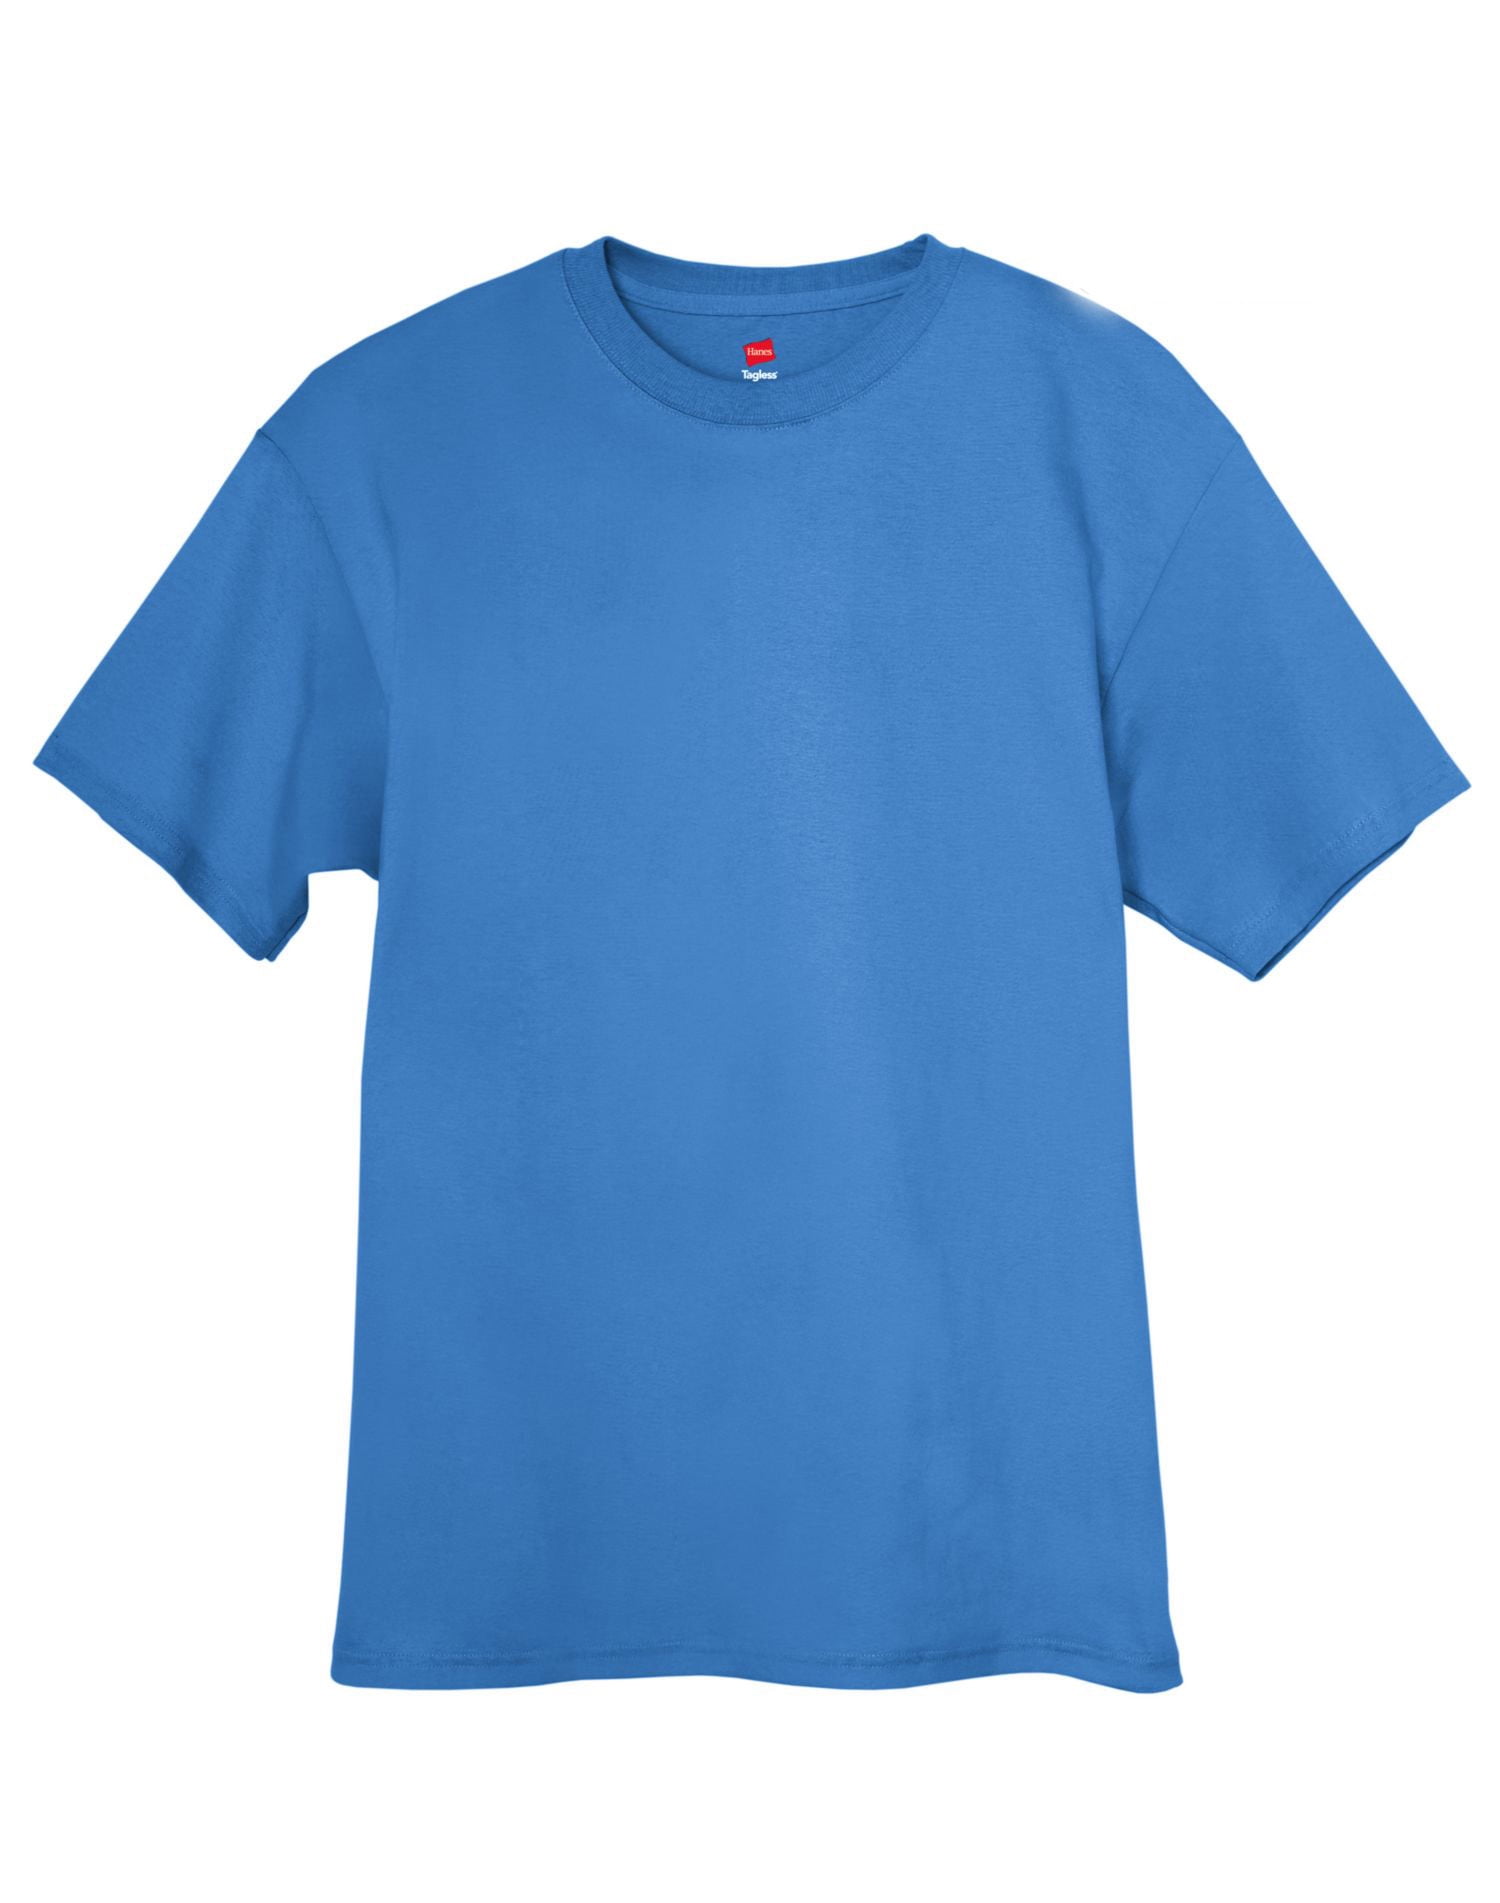 Editon Arborist 0521 Using A High School Diploma To Hanes Tagless Tee T-Shirt 